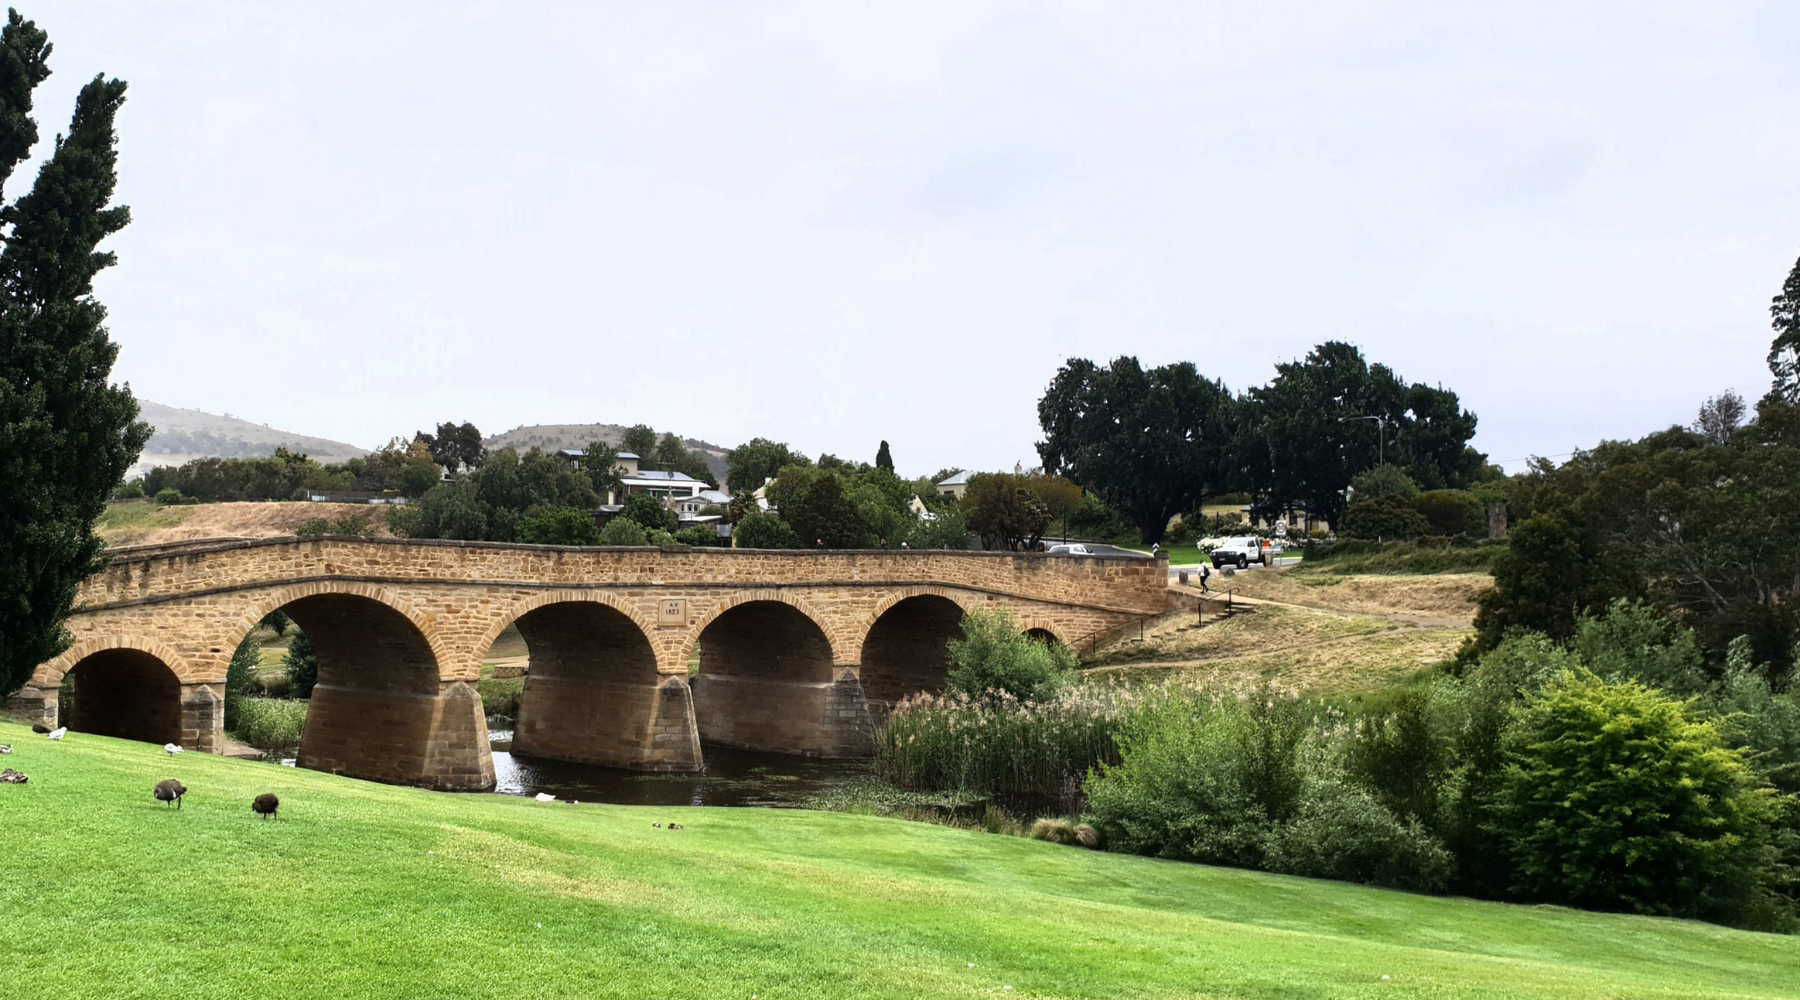 An old brick bridge across a river with lush green riverbanks.